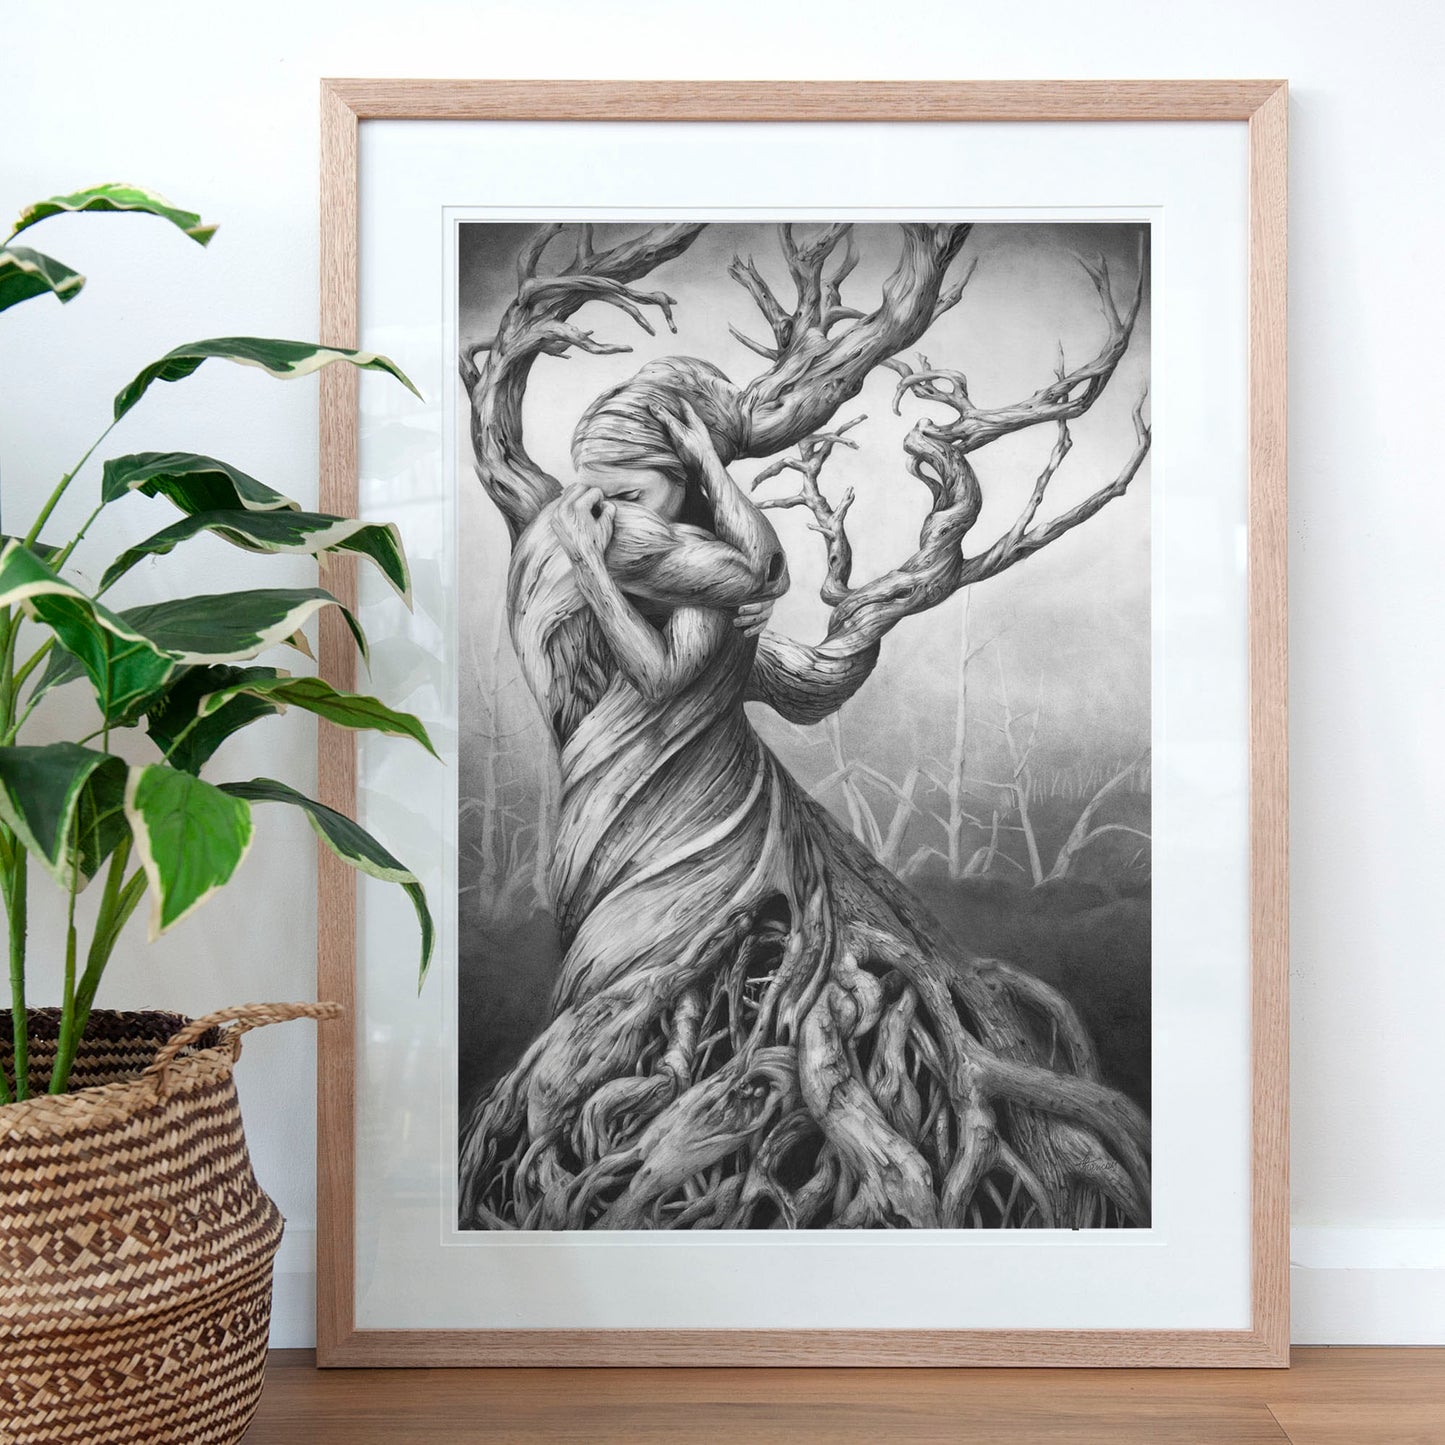 'One Tree' art print